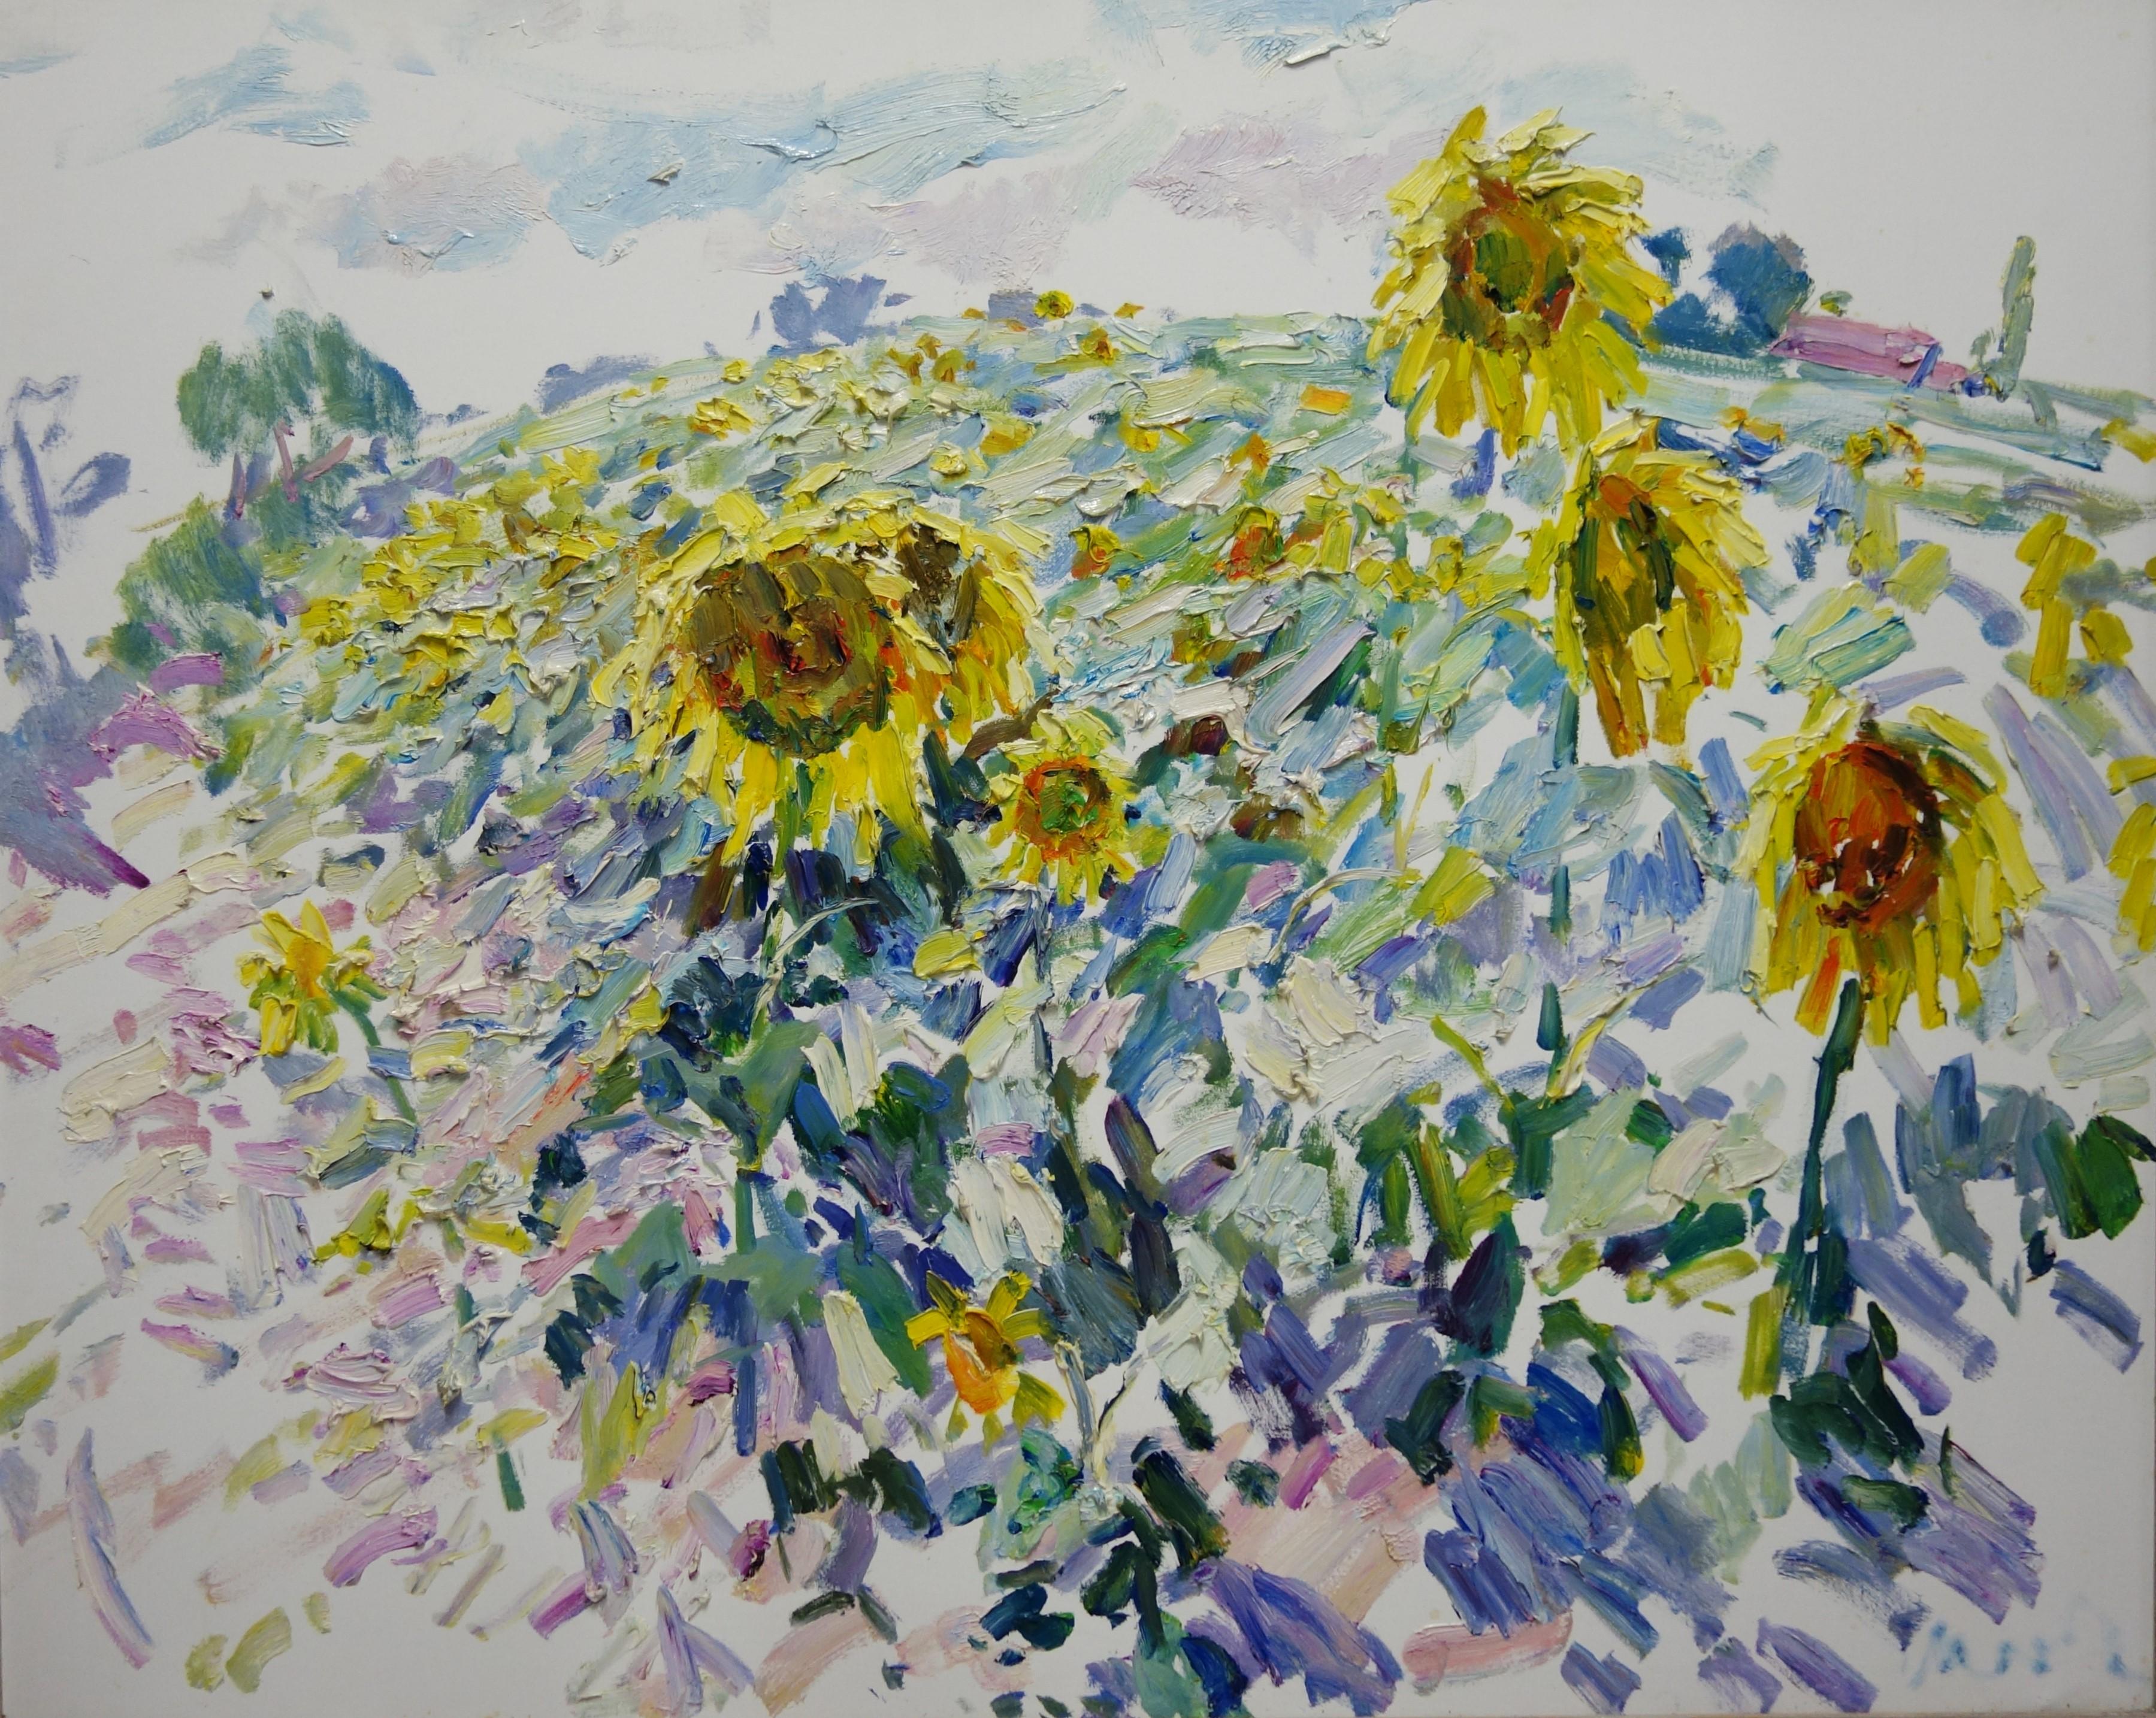 Landscape Painting Georgij Moroz - "Field of sunflowers" (Field of sunflowers)  jaune, tournesols, été, huile, cm. 100 x 80